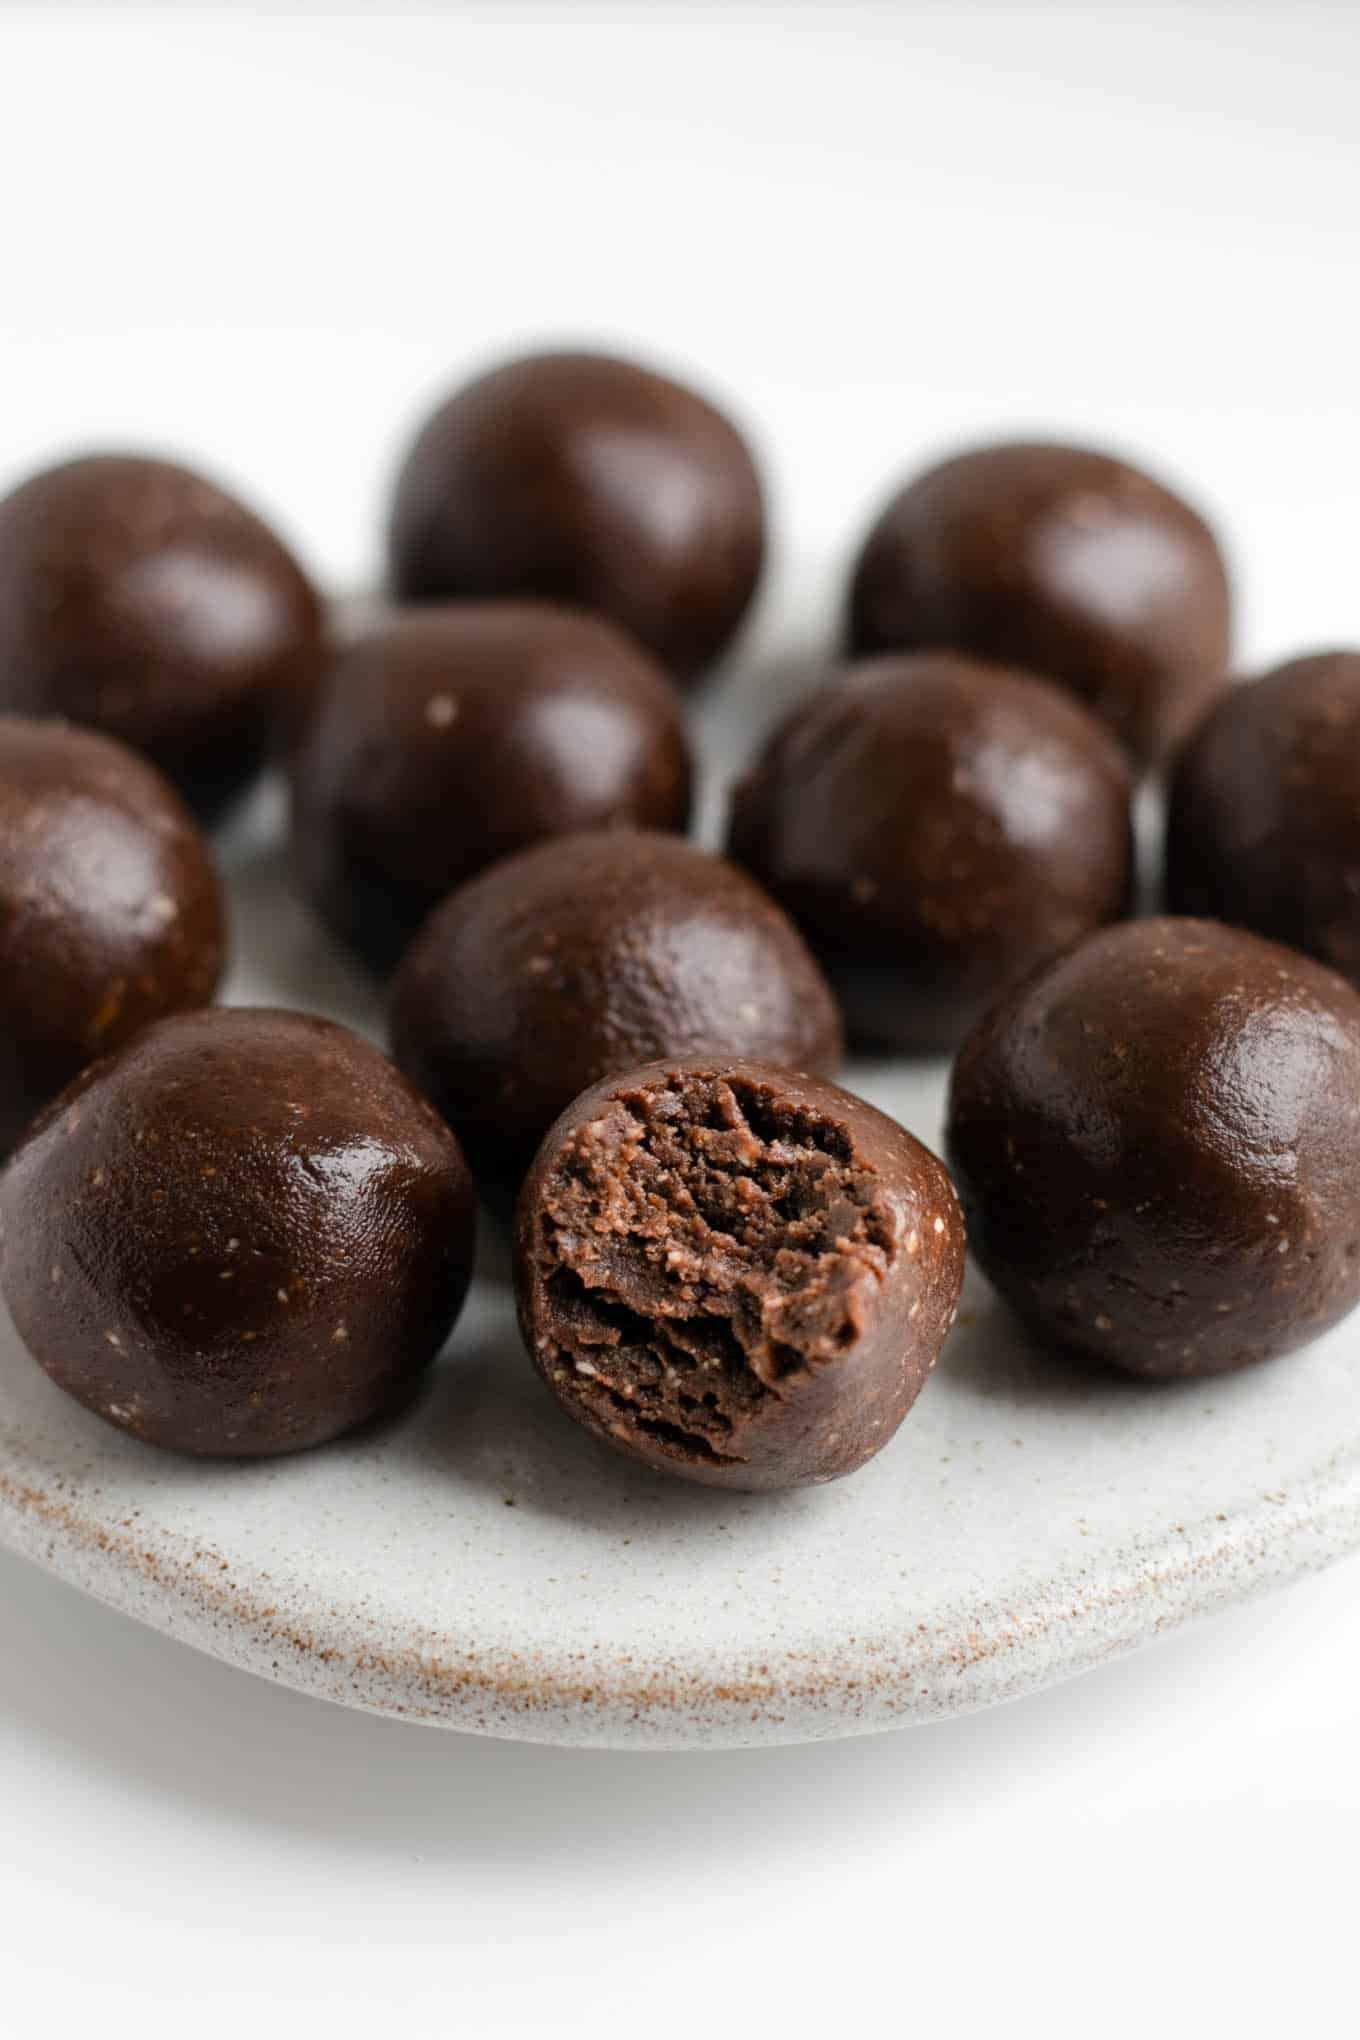 Super easy chocolate and peanut butter energy bites #dairyfree #glutenfreerecipe #veganfood | via @annabanana.co